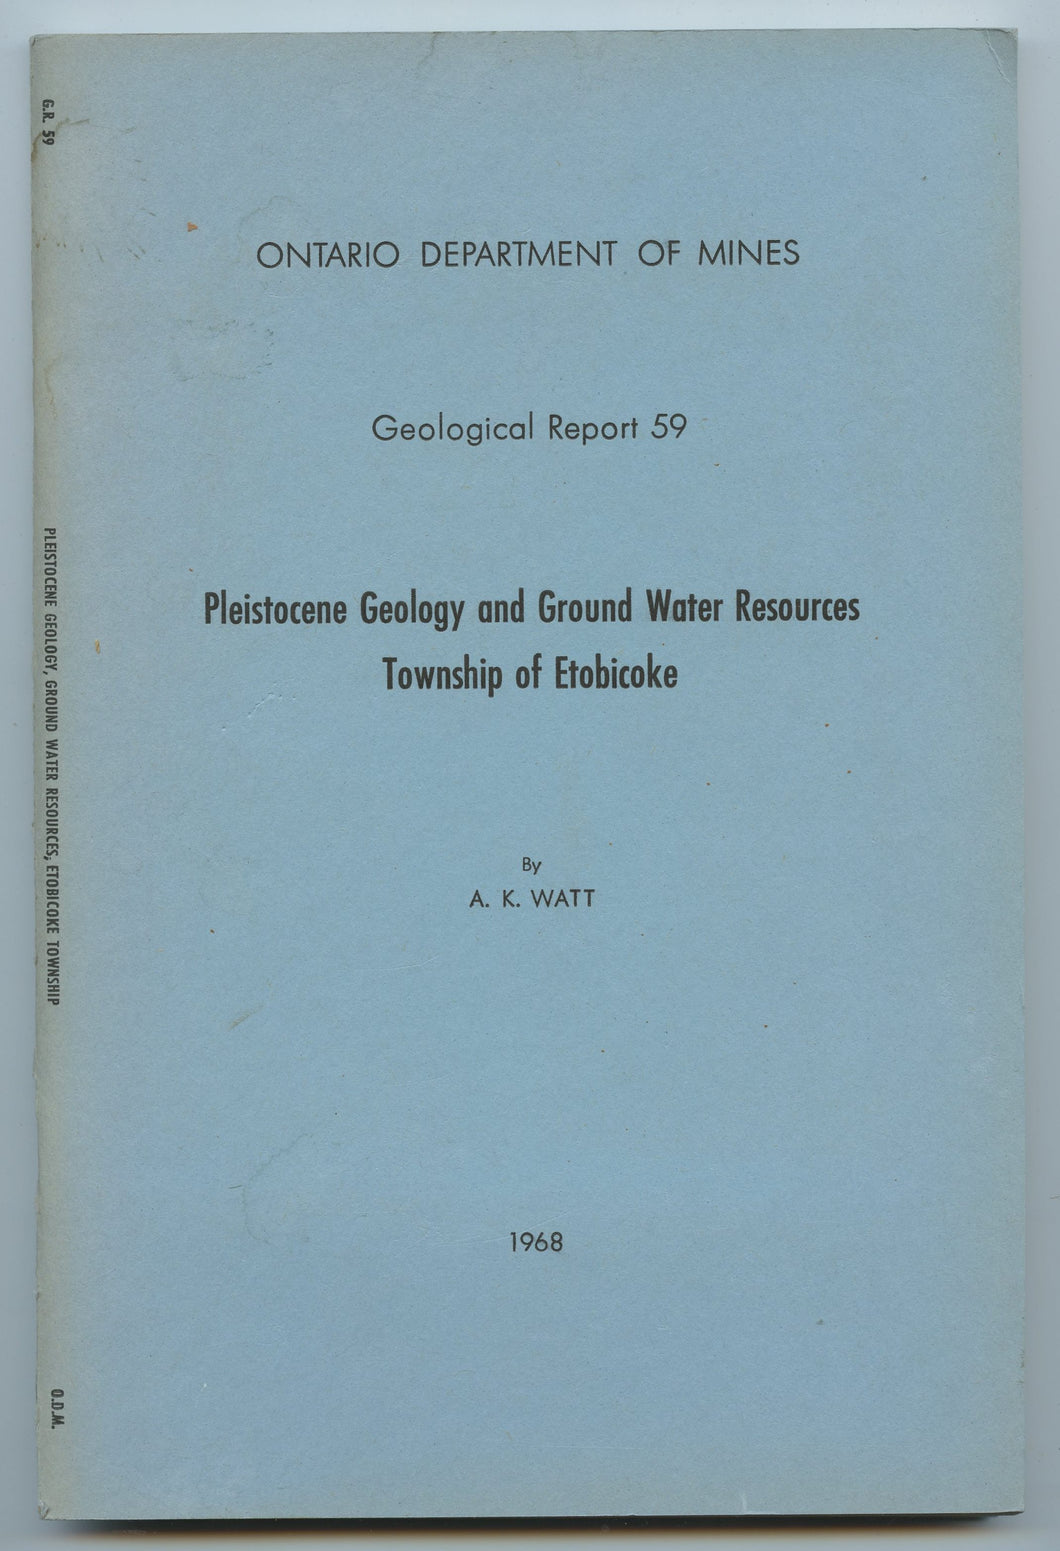 Pleistocene Geology and Ground Water Resources, Township of Etobicoke 